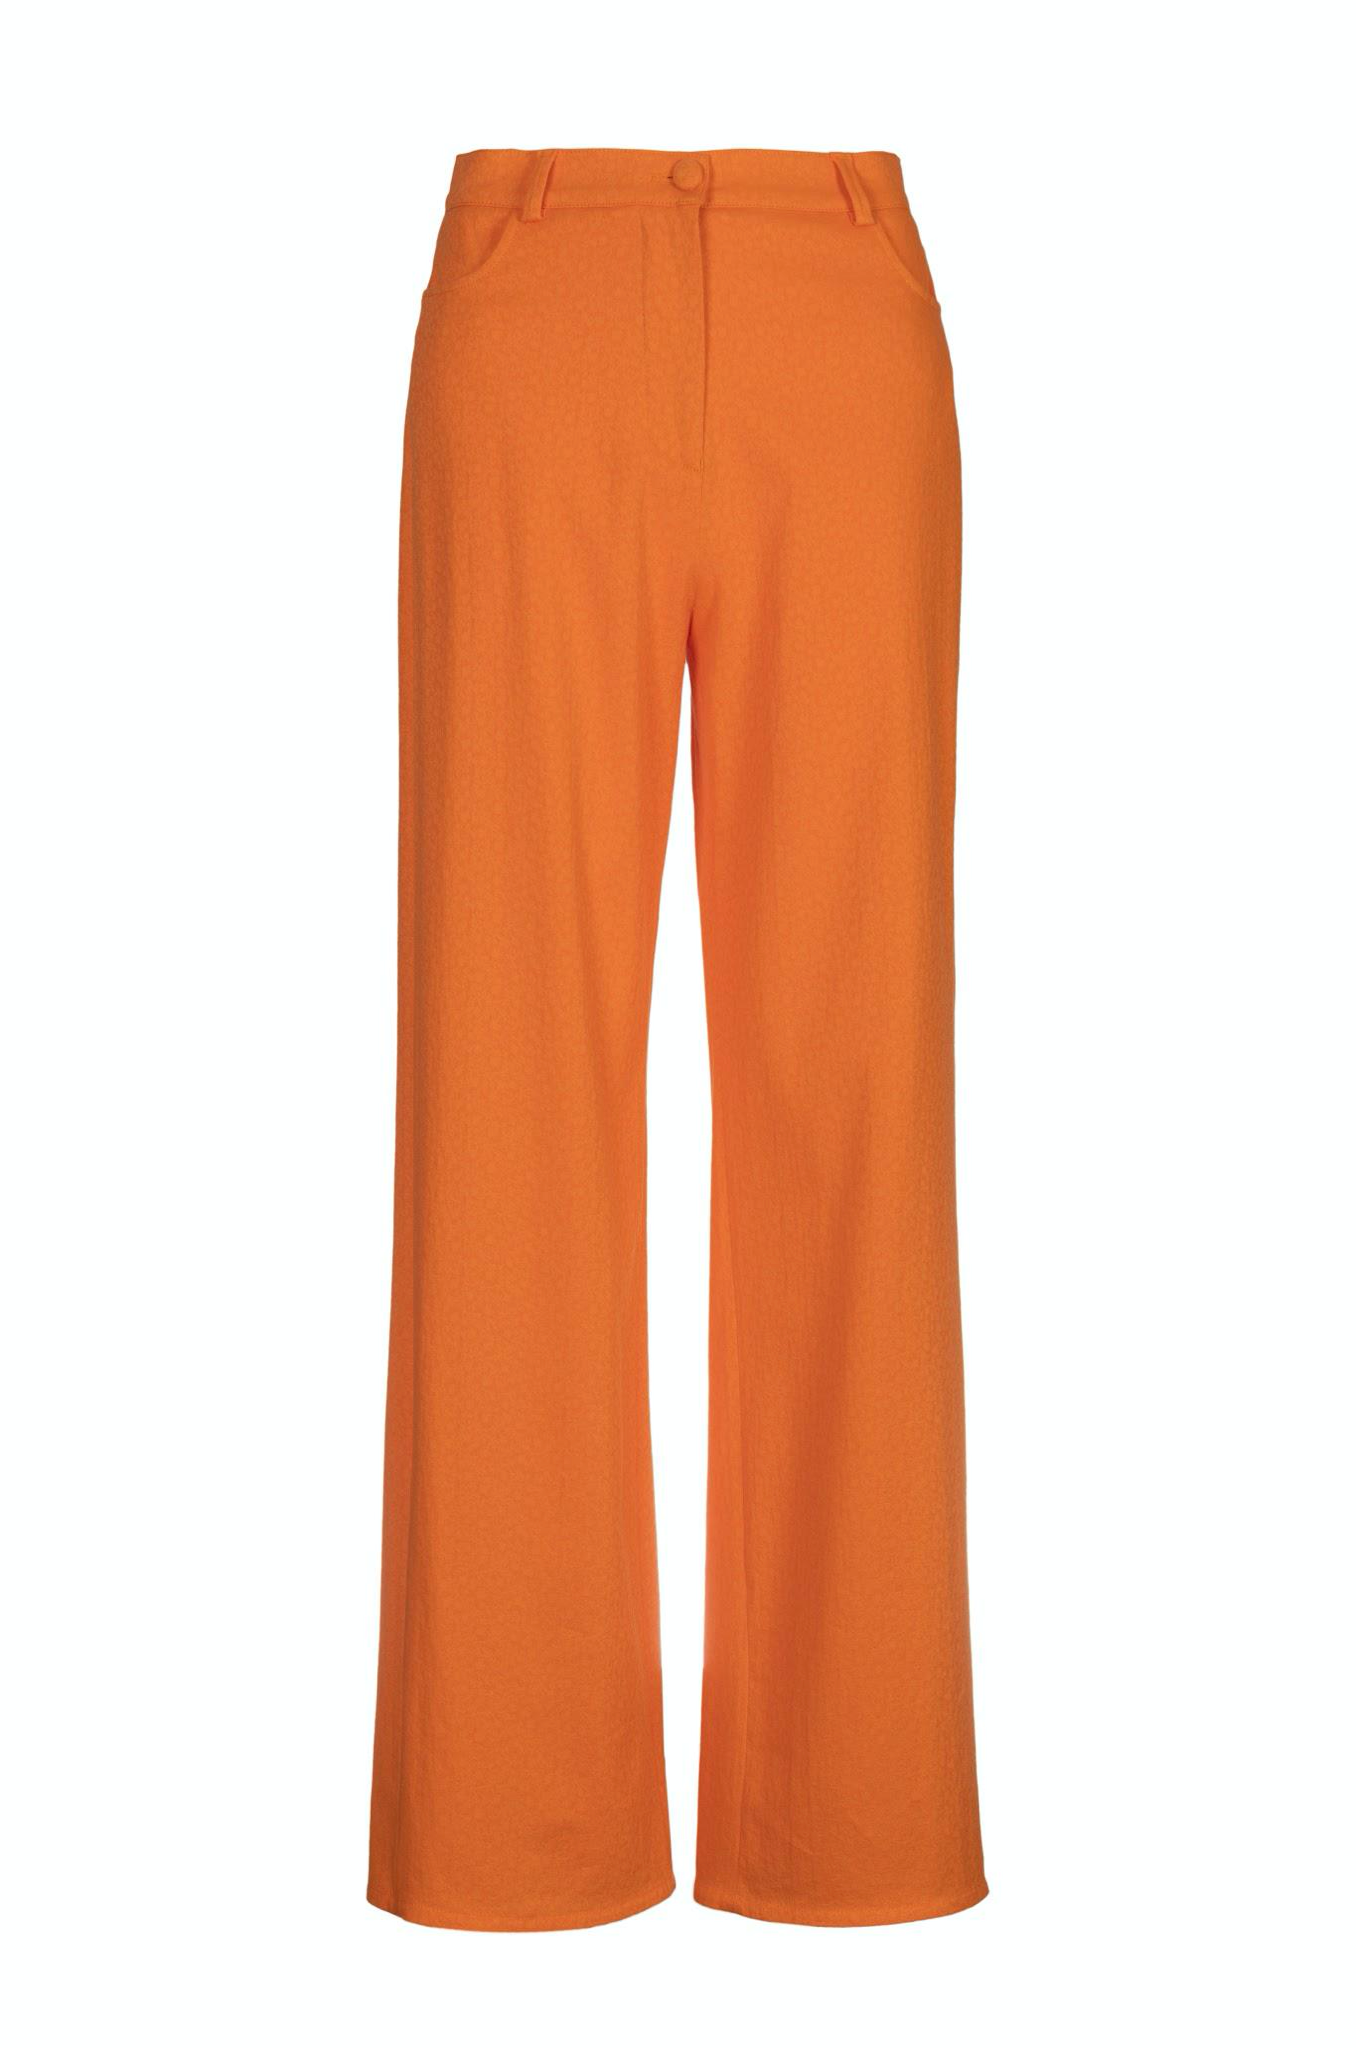 Wide Leg Orange Pants